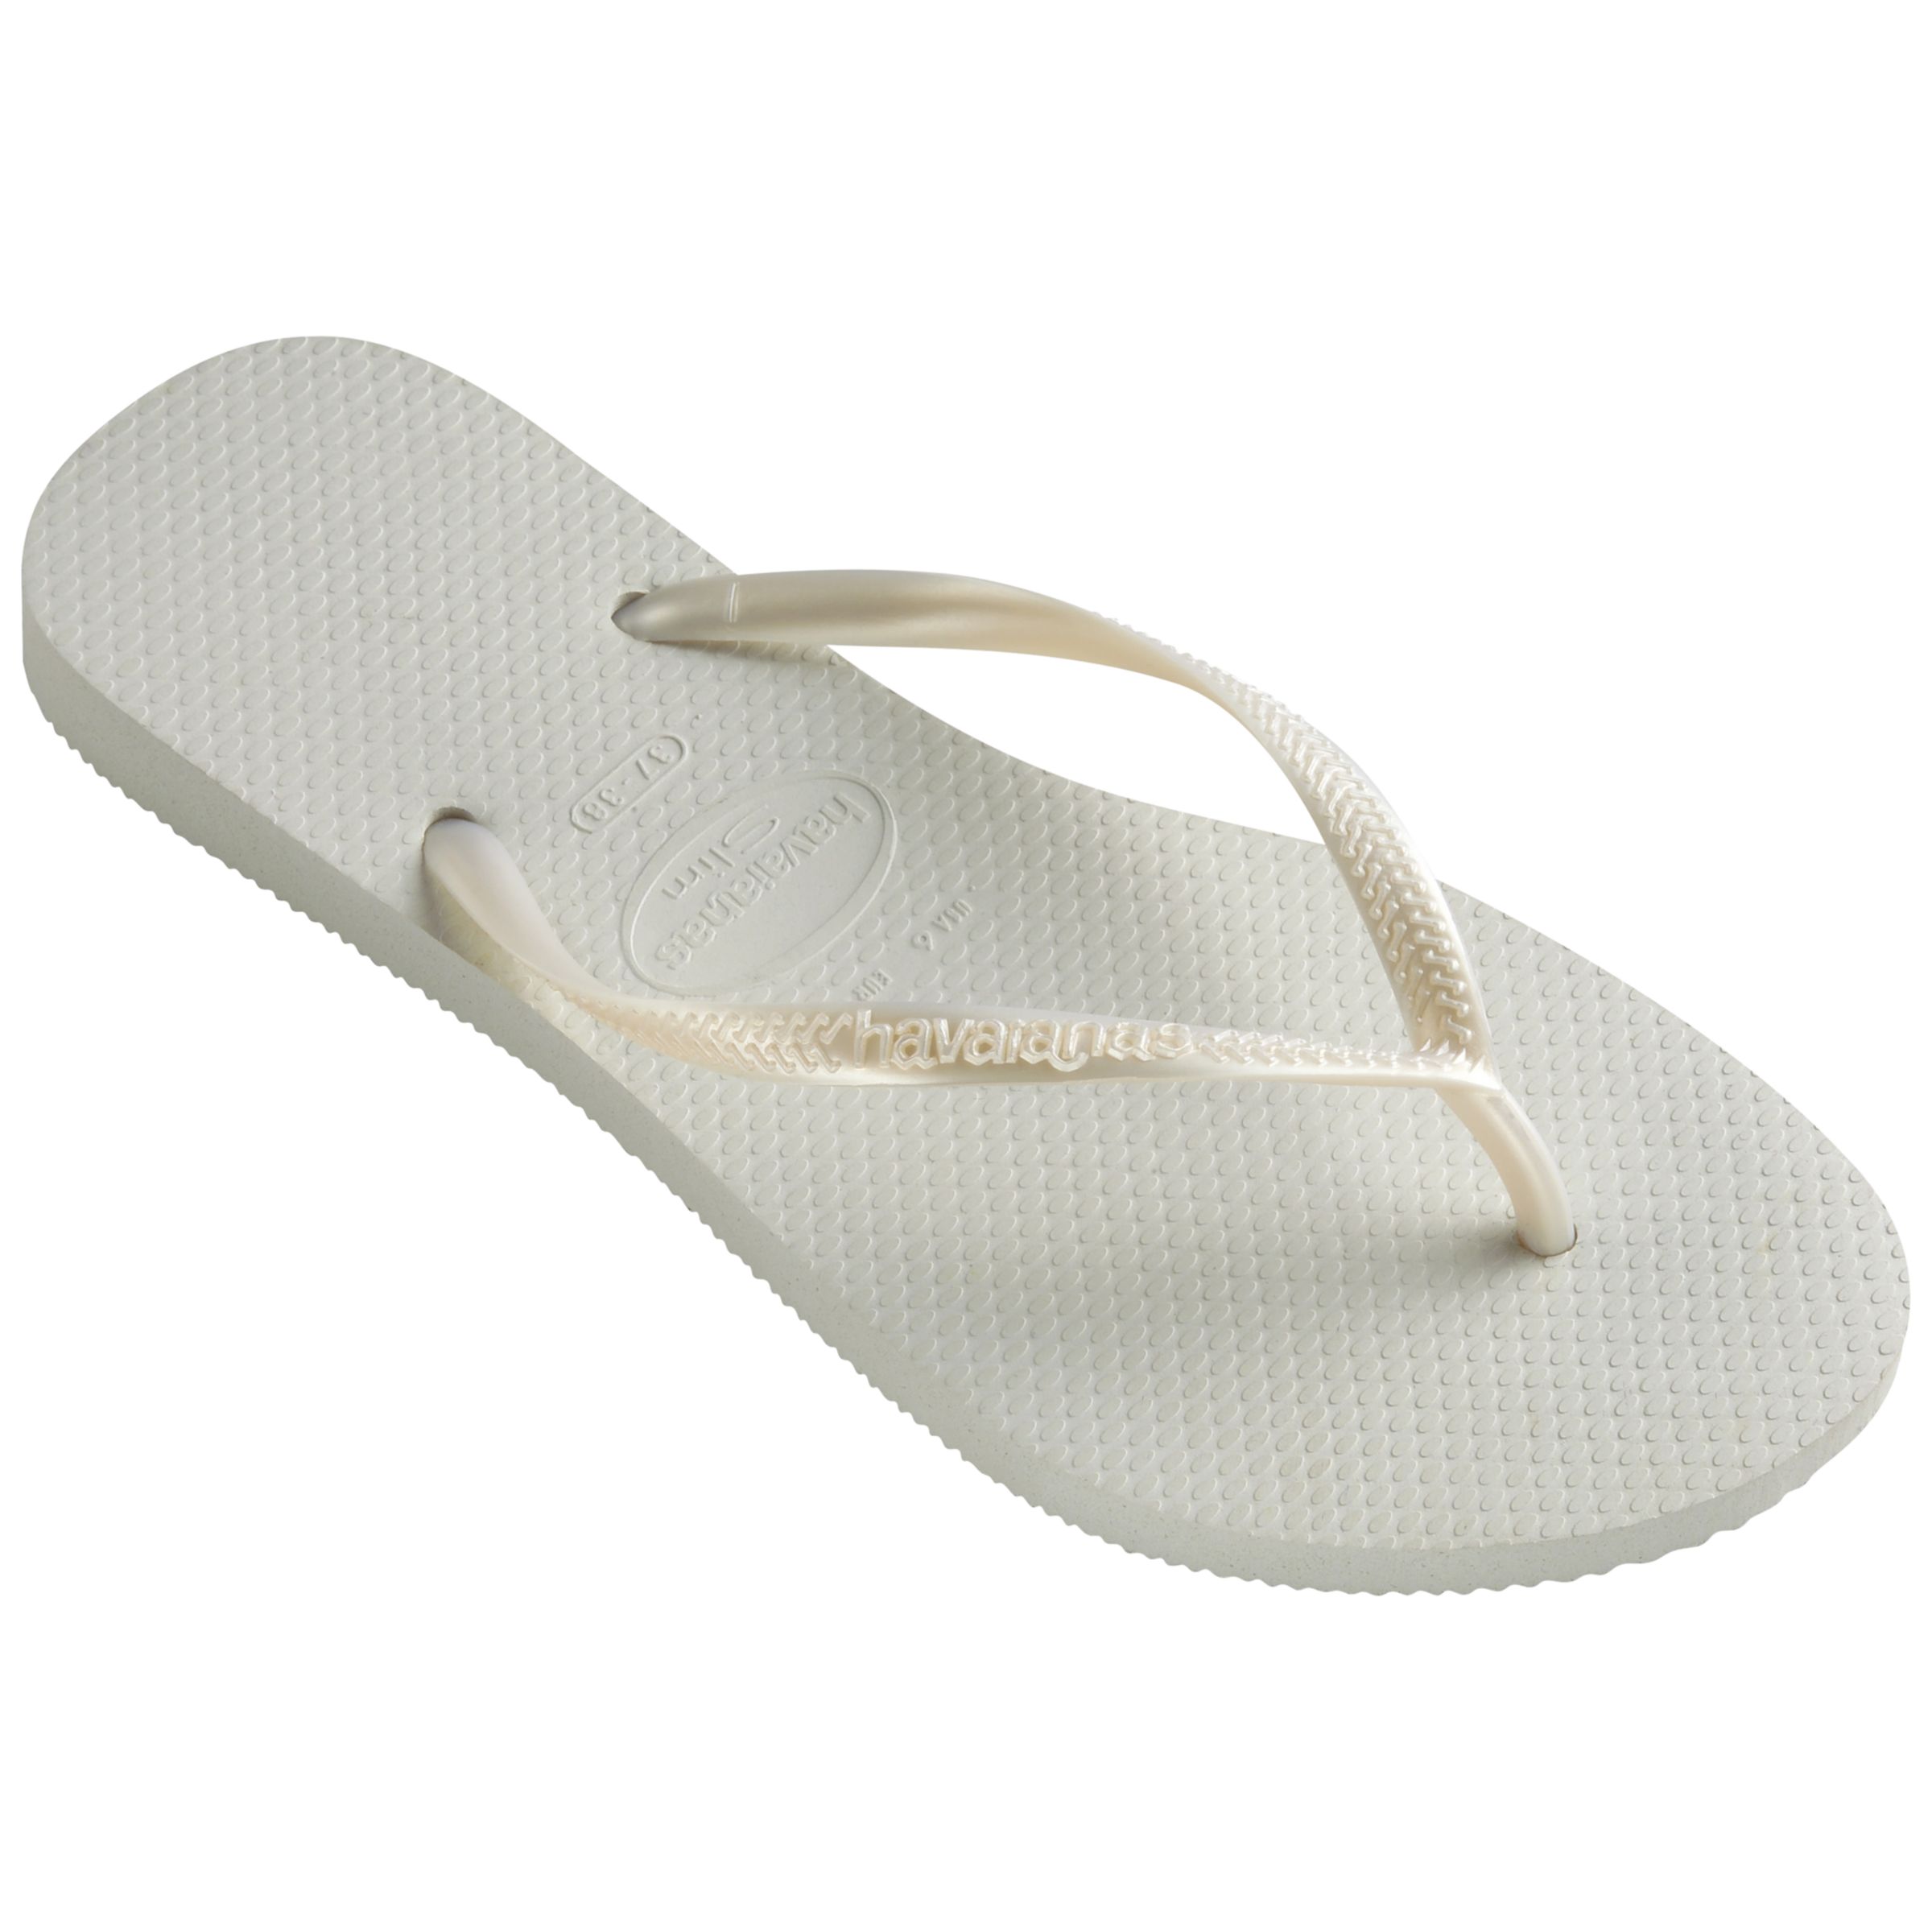 Havaianas Slim Flip Flops, White, 6-7